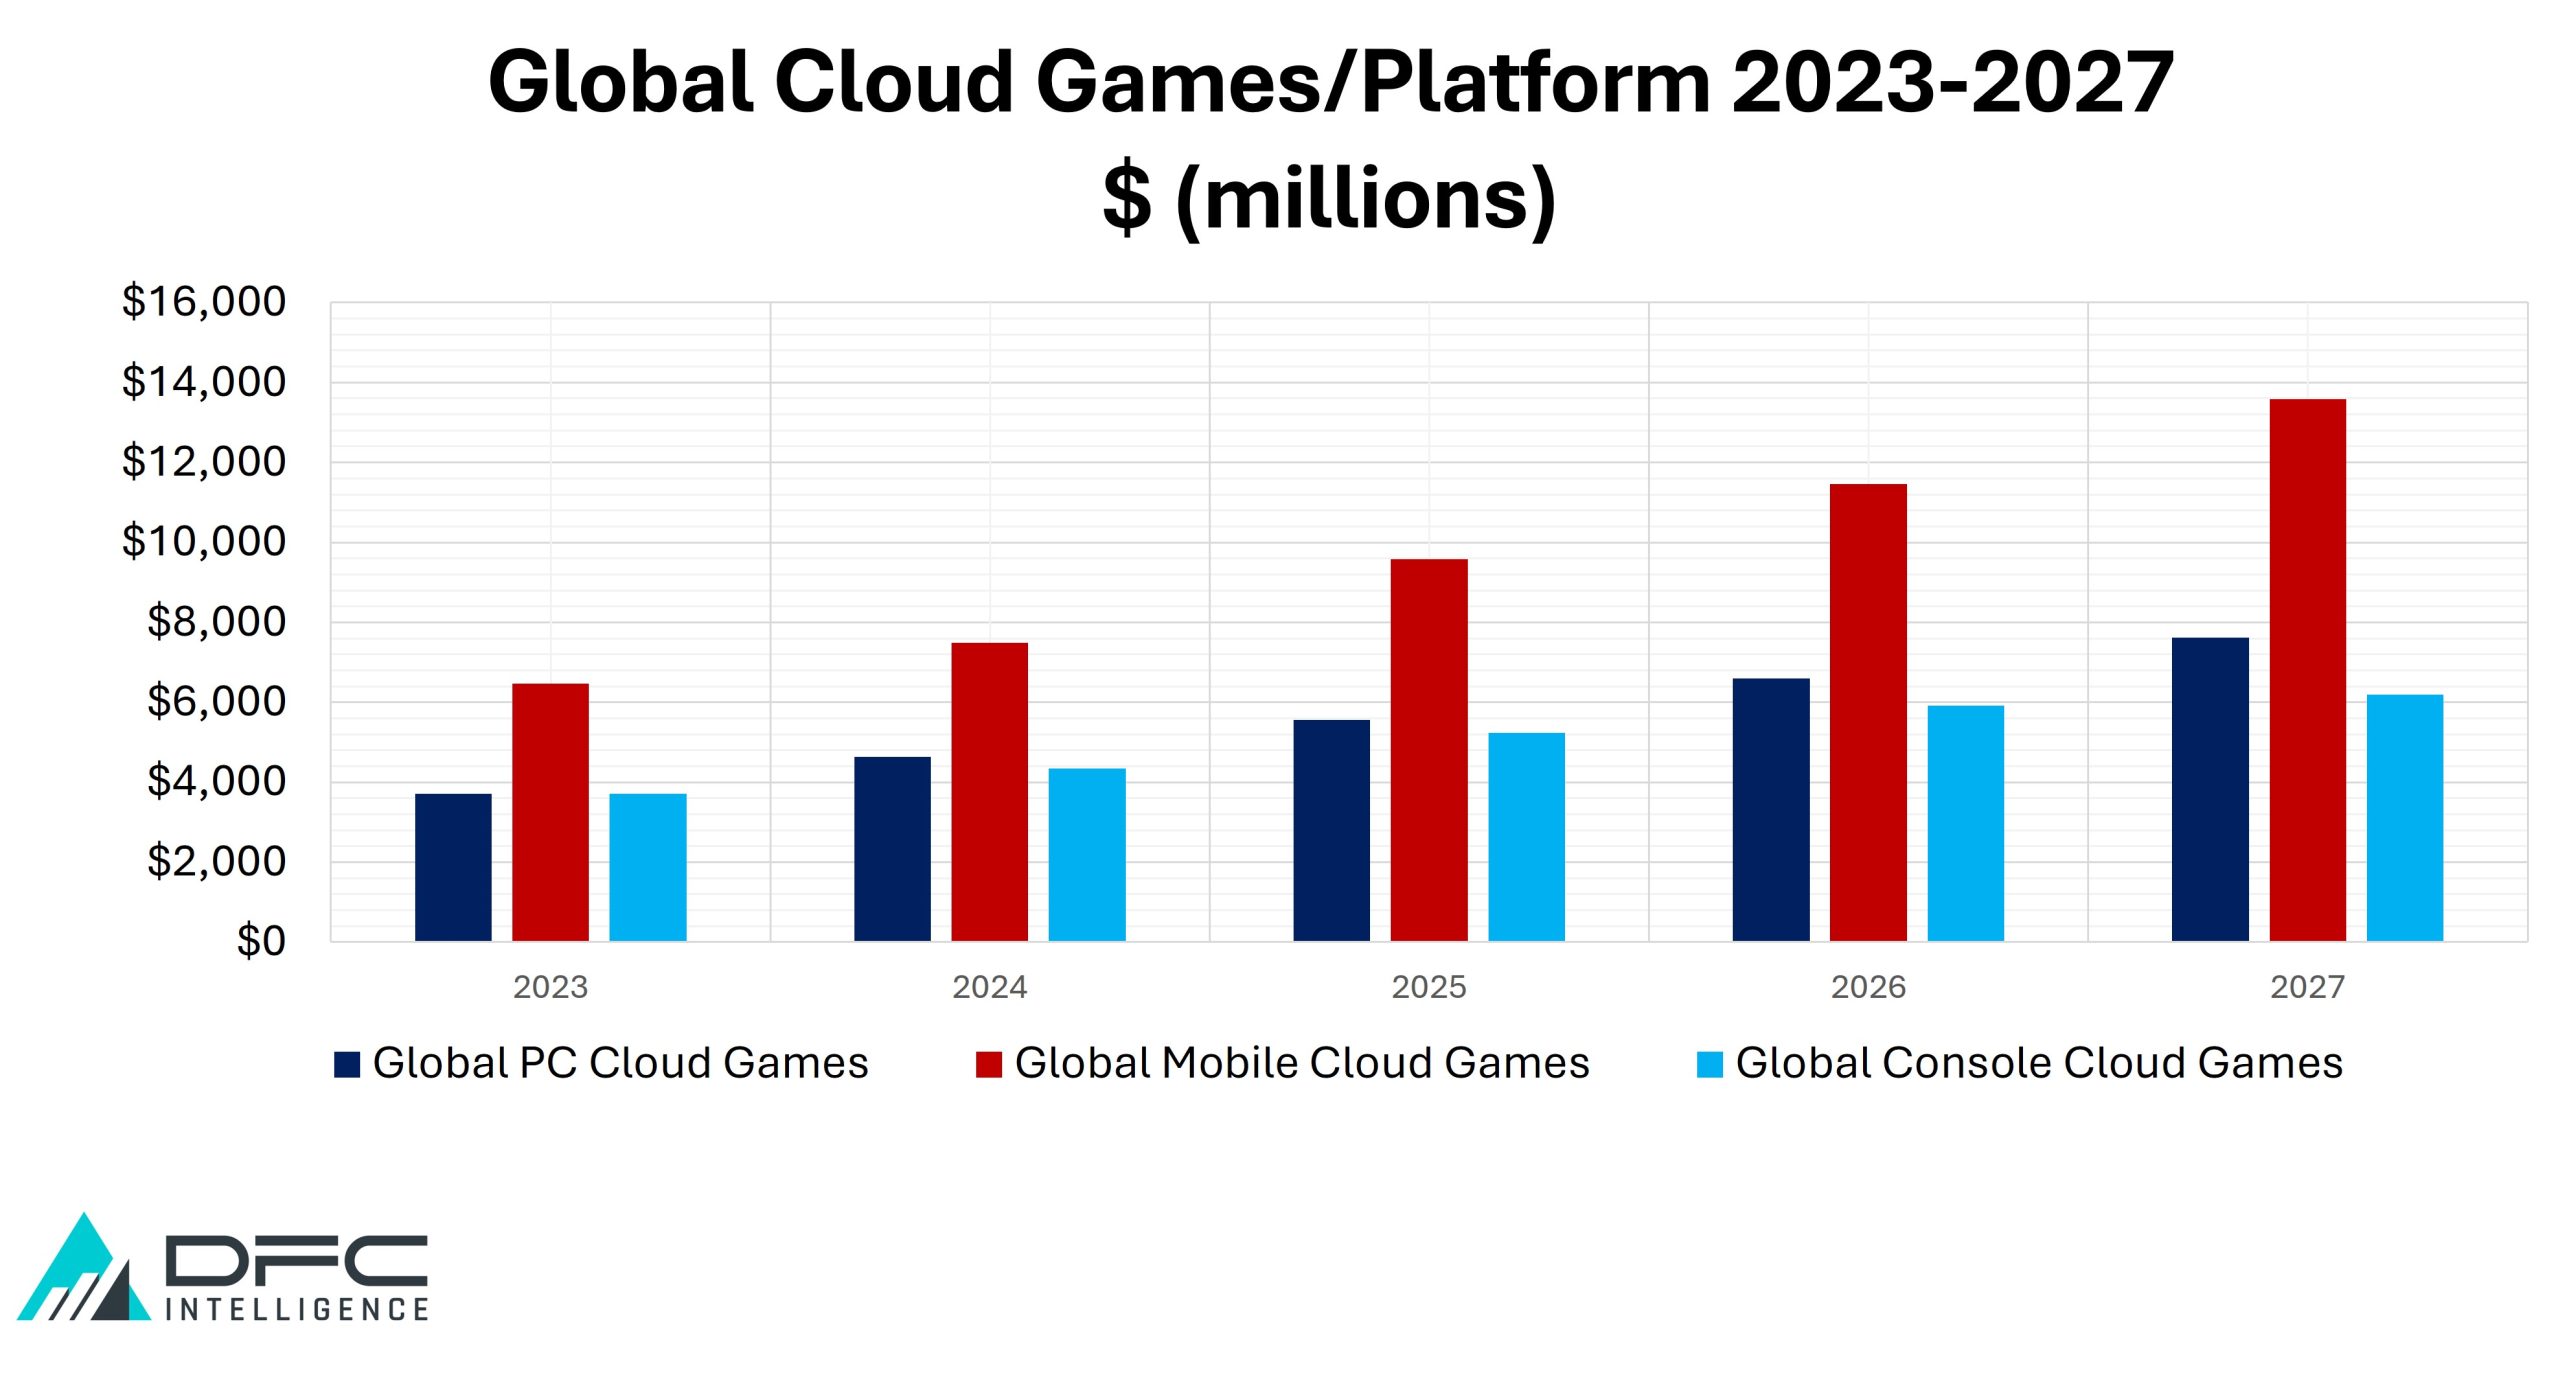 Total Worldwide Cloud Games By Platform 2023-2027 $ (millions)